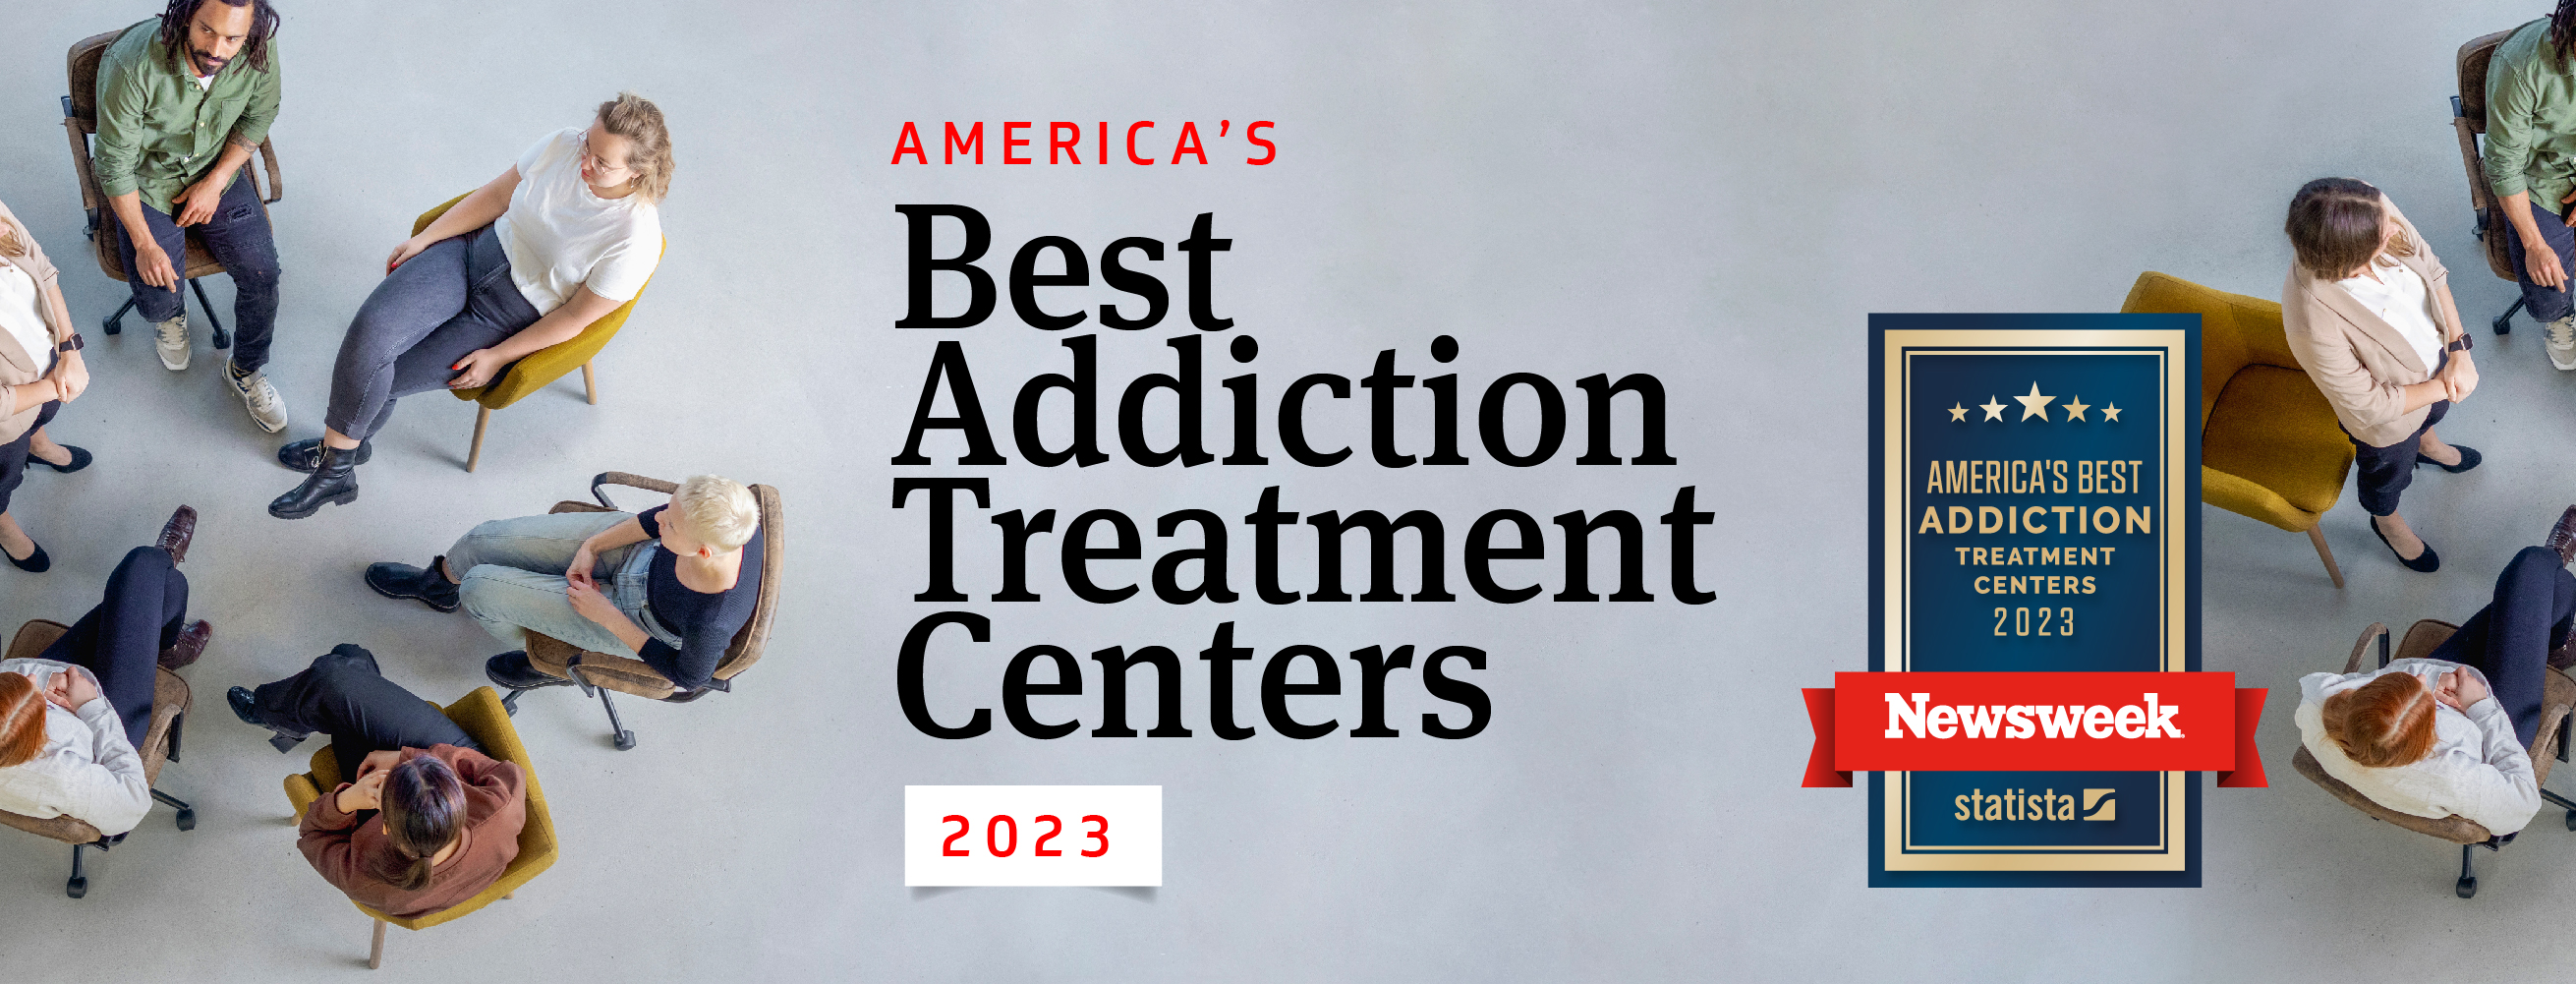 America's Best Addiction Treatment Centers 2023